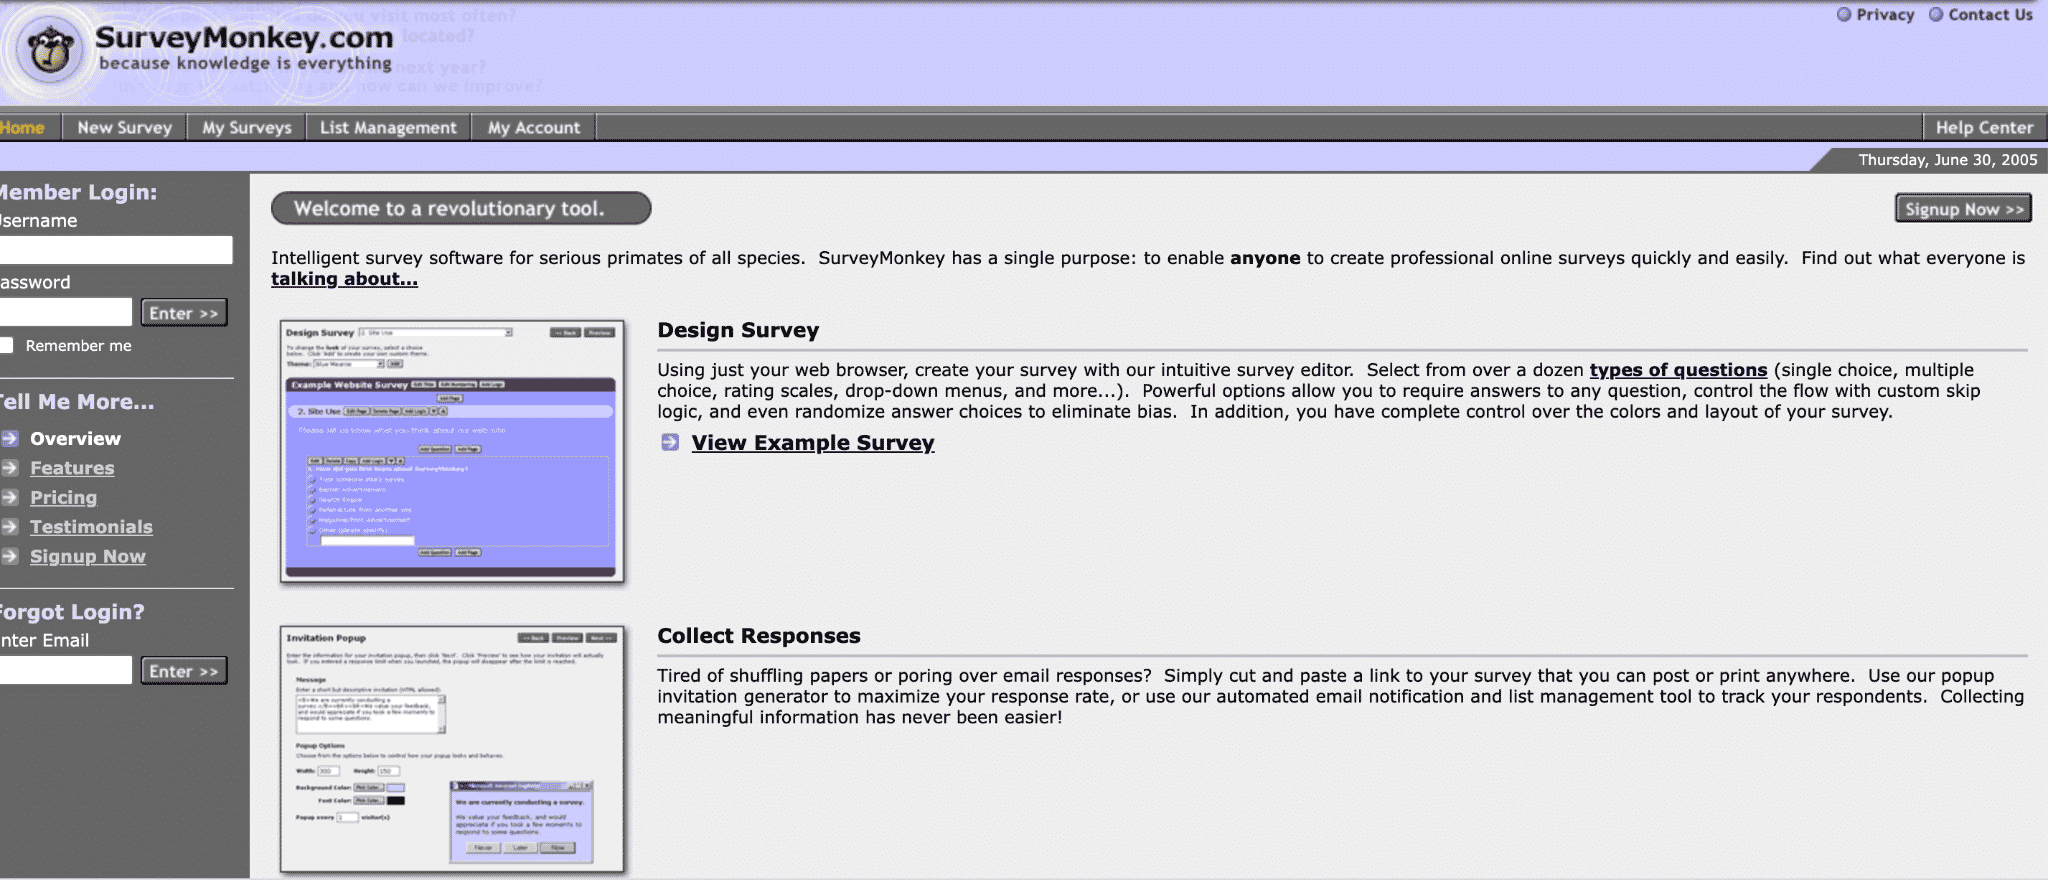 捕获de pantalla de la página de inicio de SurveyMonkey de 2005。El texto主骰子